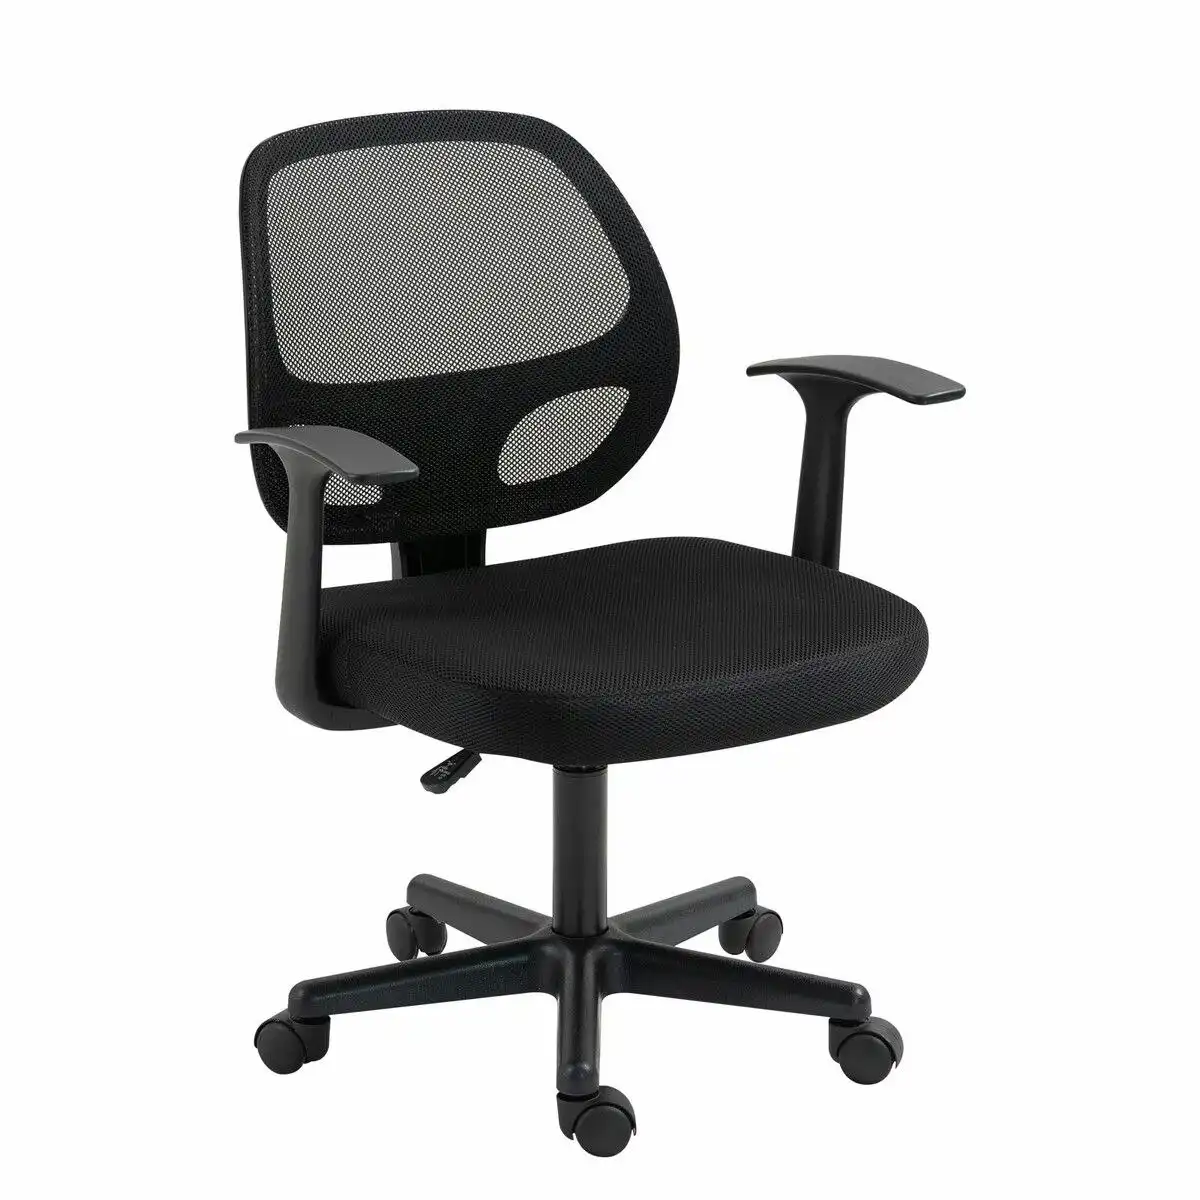 Neader Mesh Office Desk Chair Ergonomic Armchair Study Executive Computer Home Work Reclining Adjustable Swivel Recliner Black